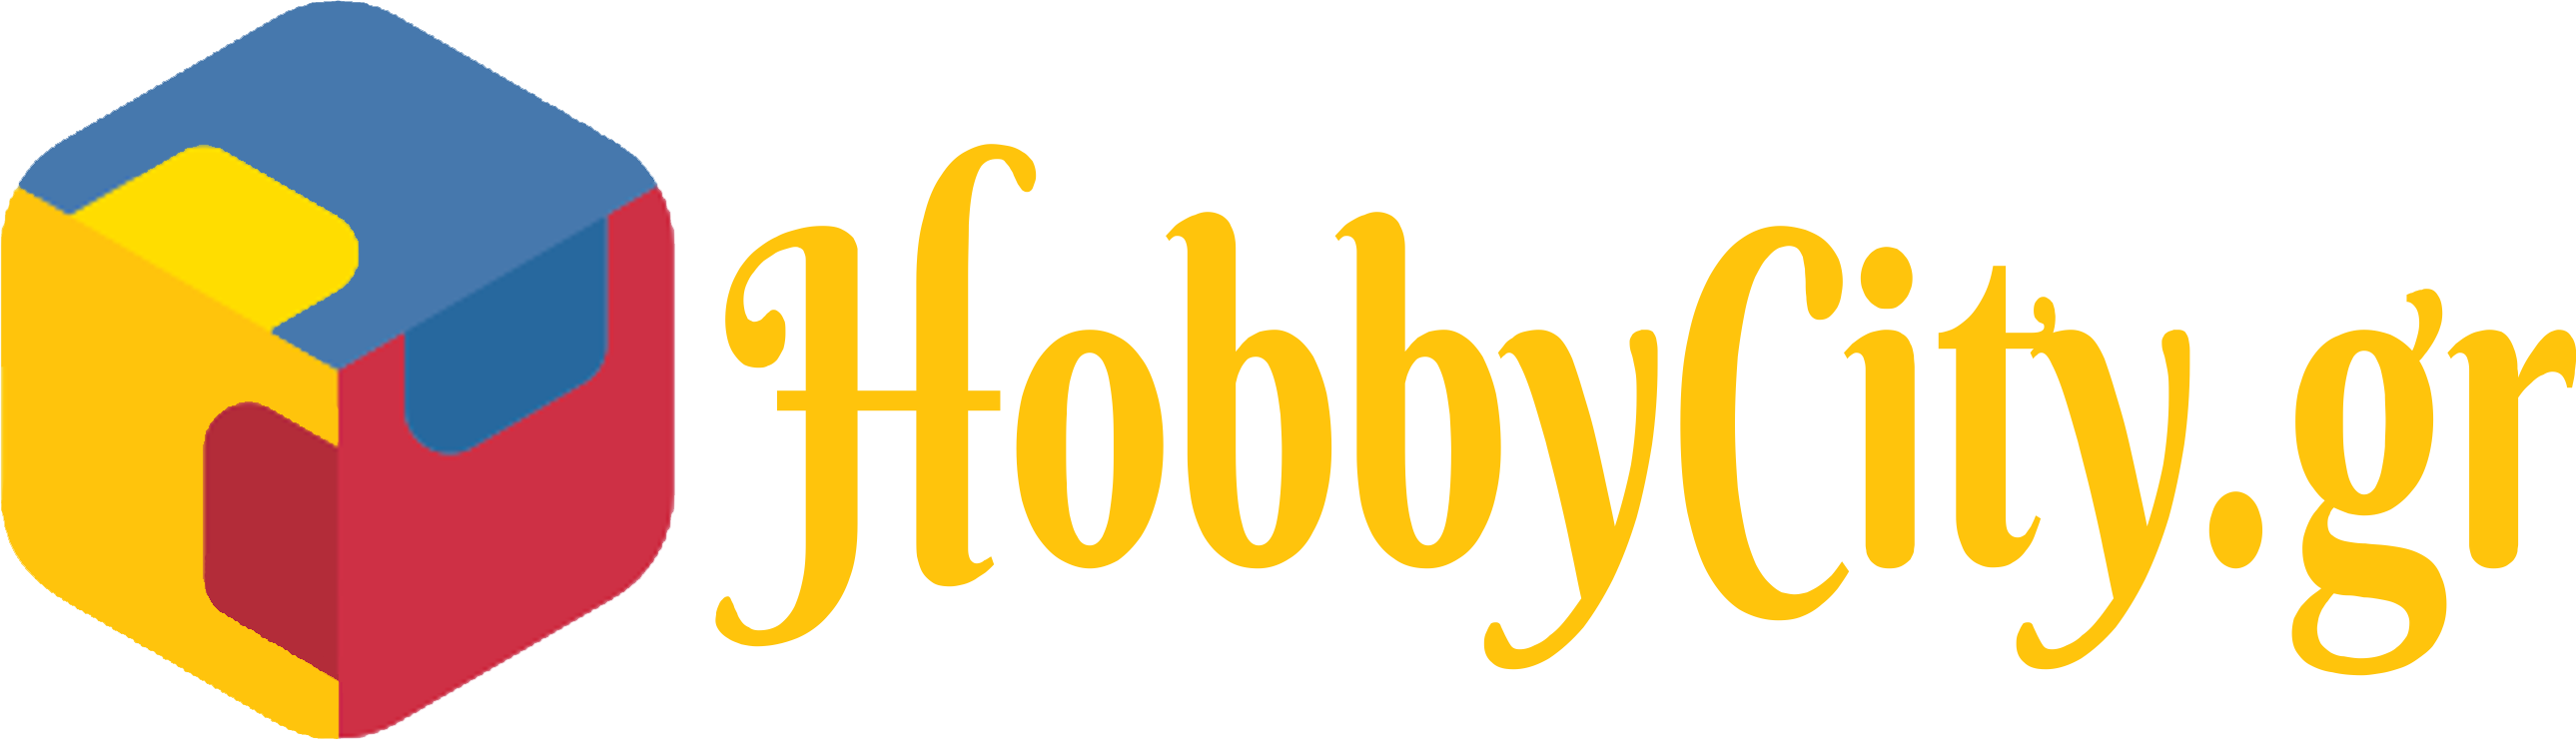 Hobbycity